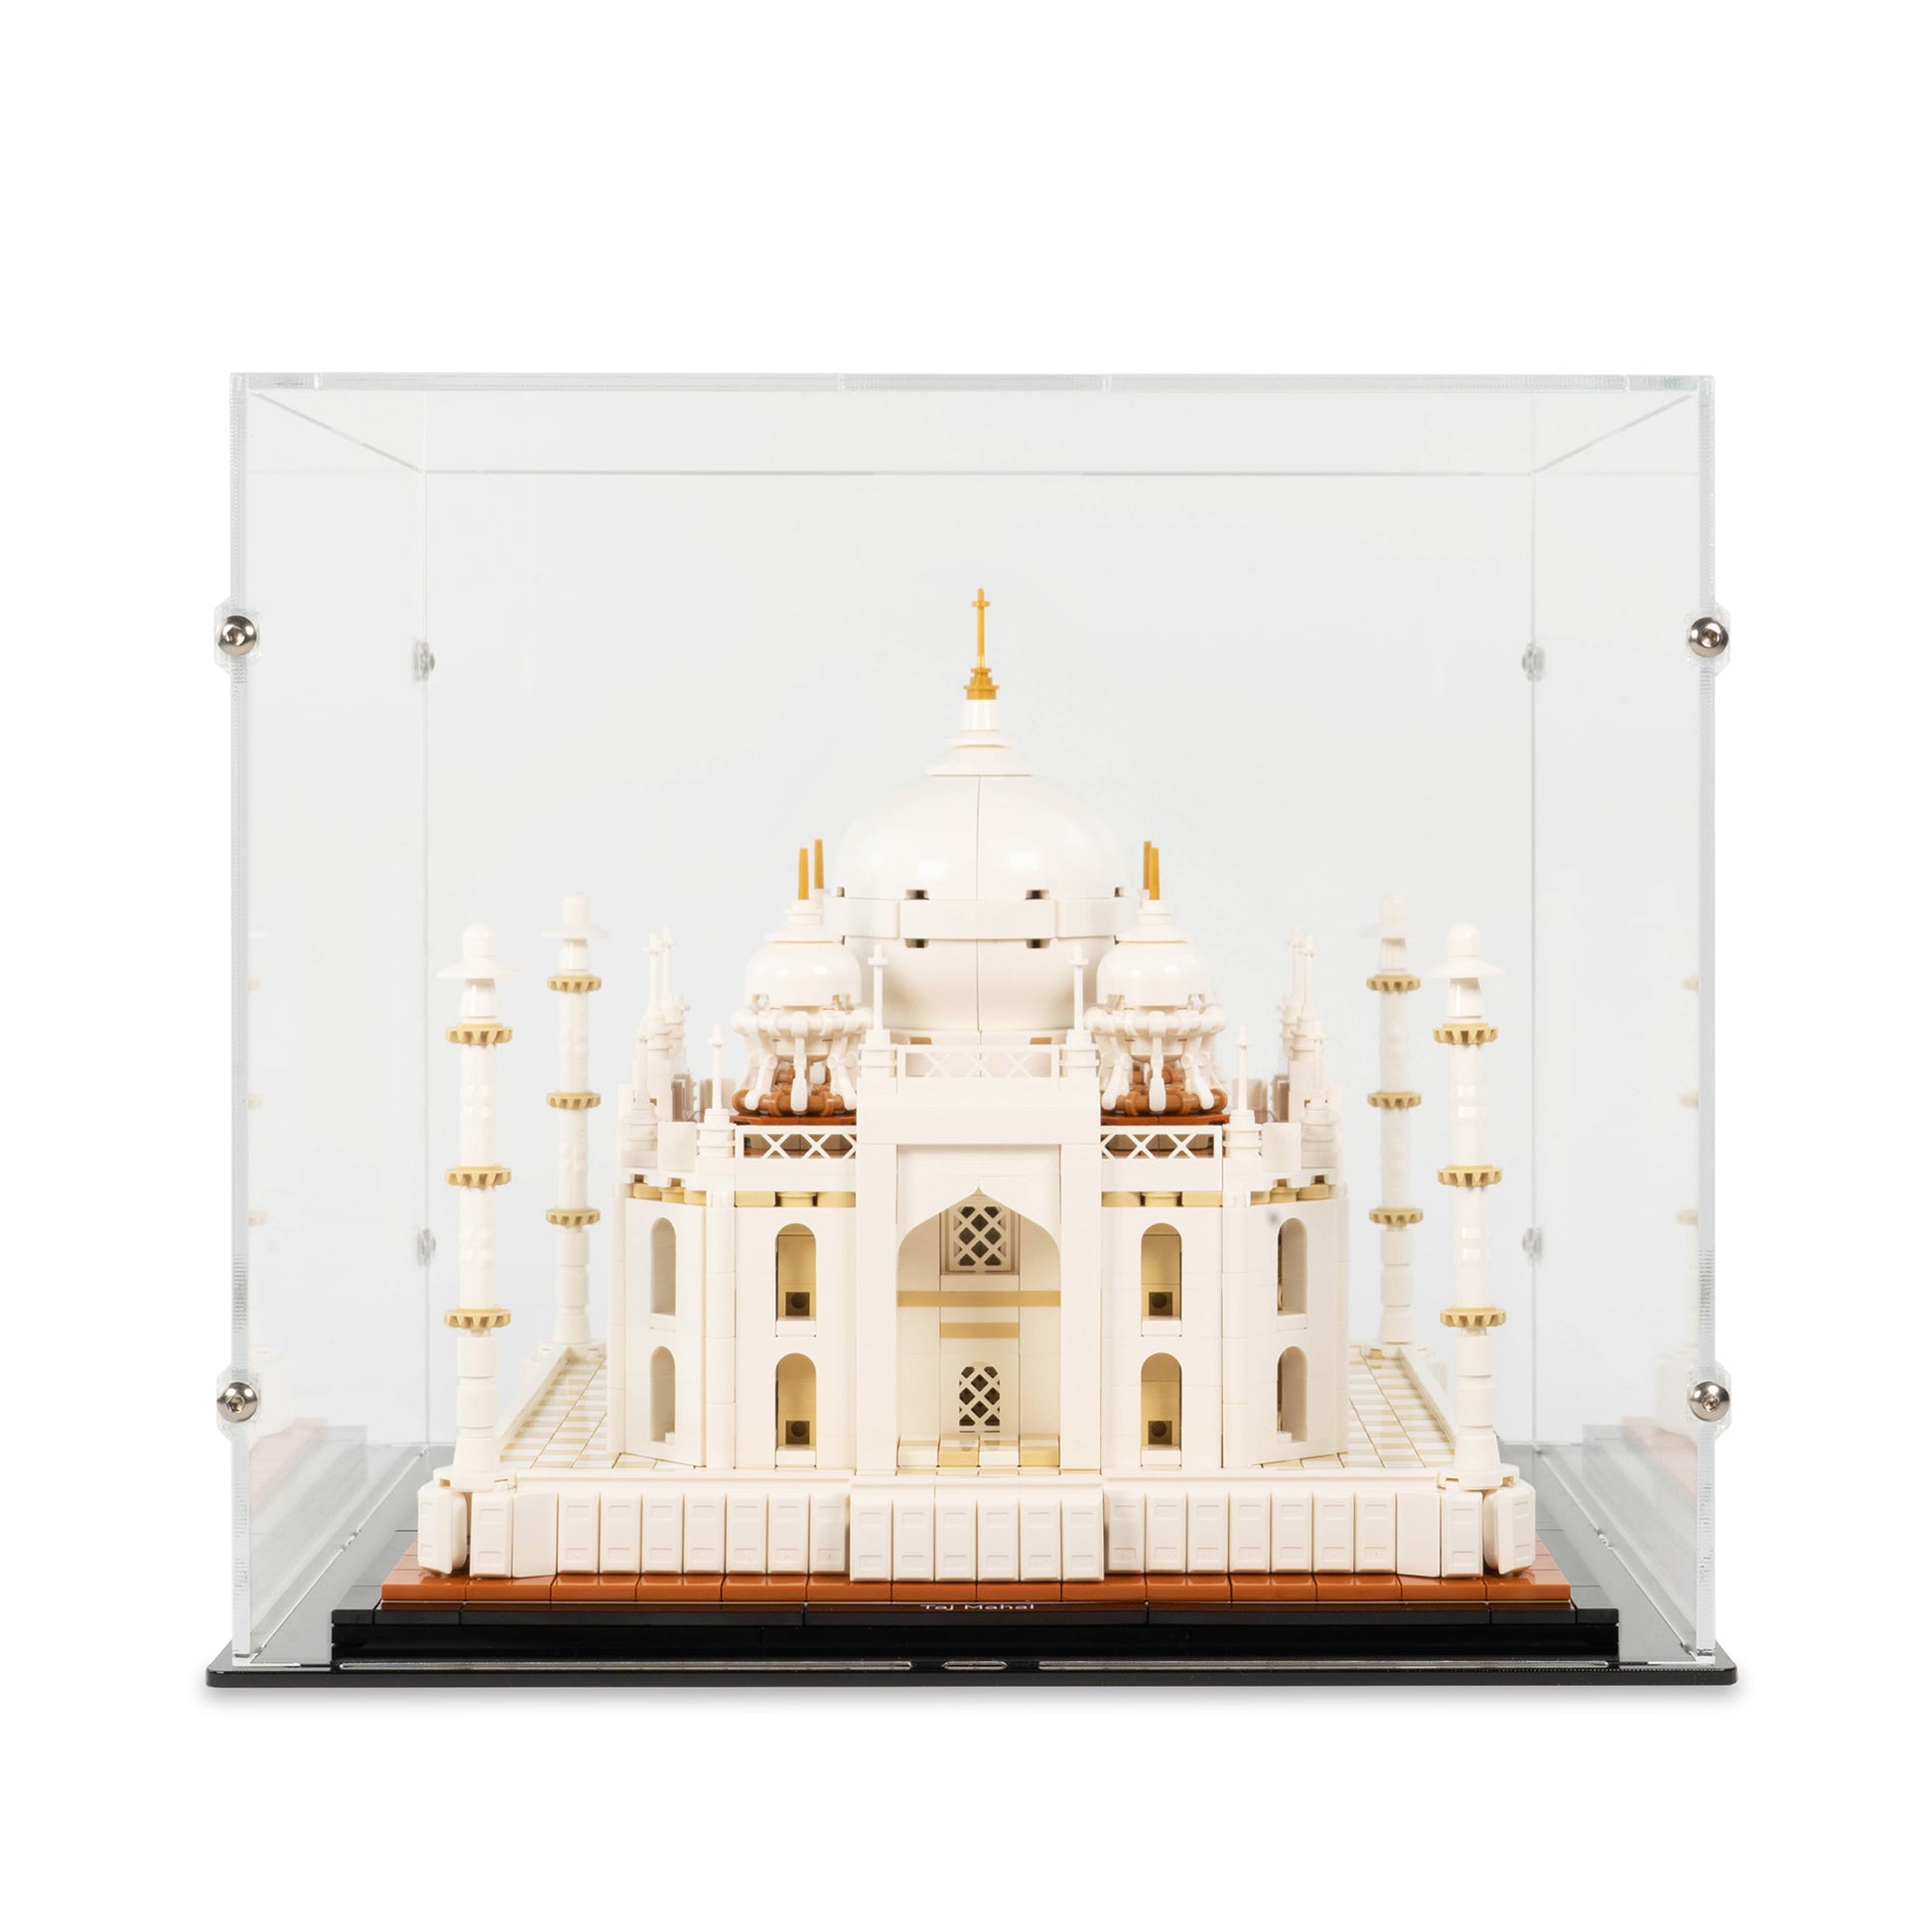 Building the new LEGO Taj Mahal 21056 